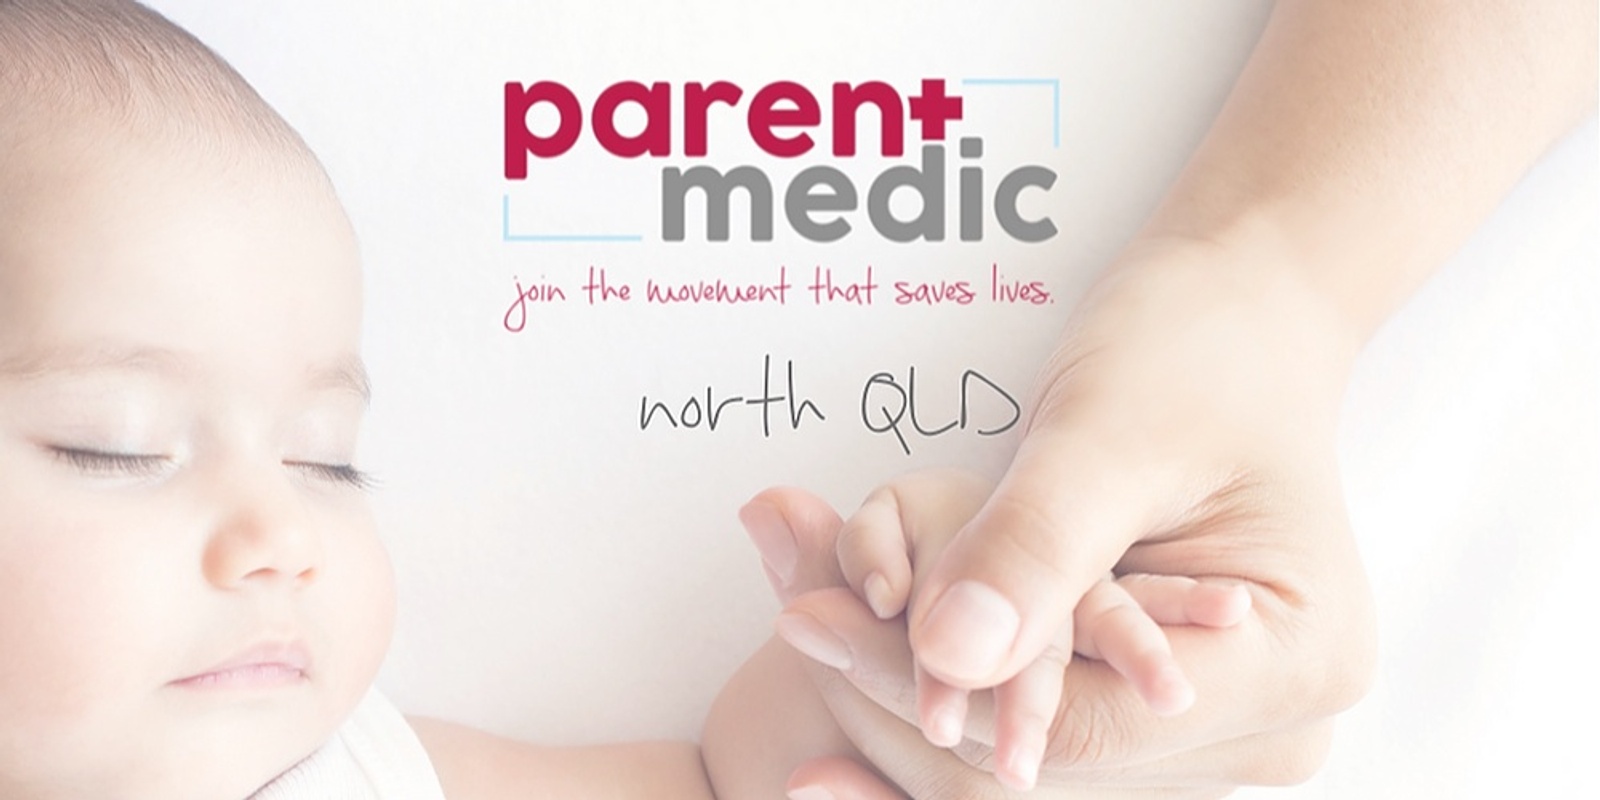 Parentmedic Proserpine Baby/Child First Aid